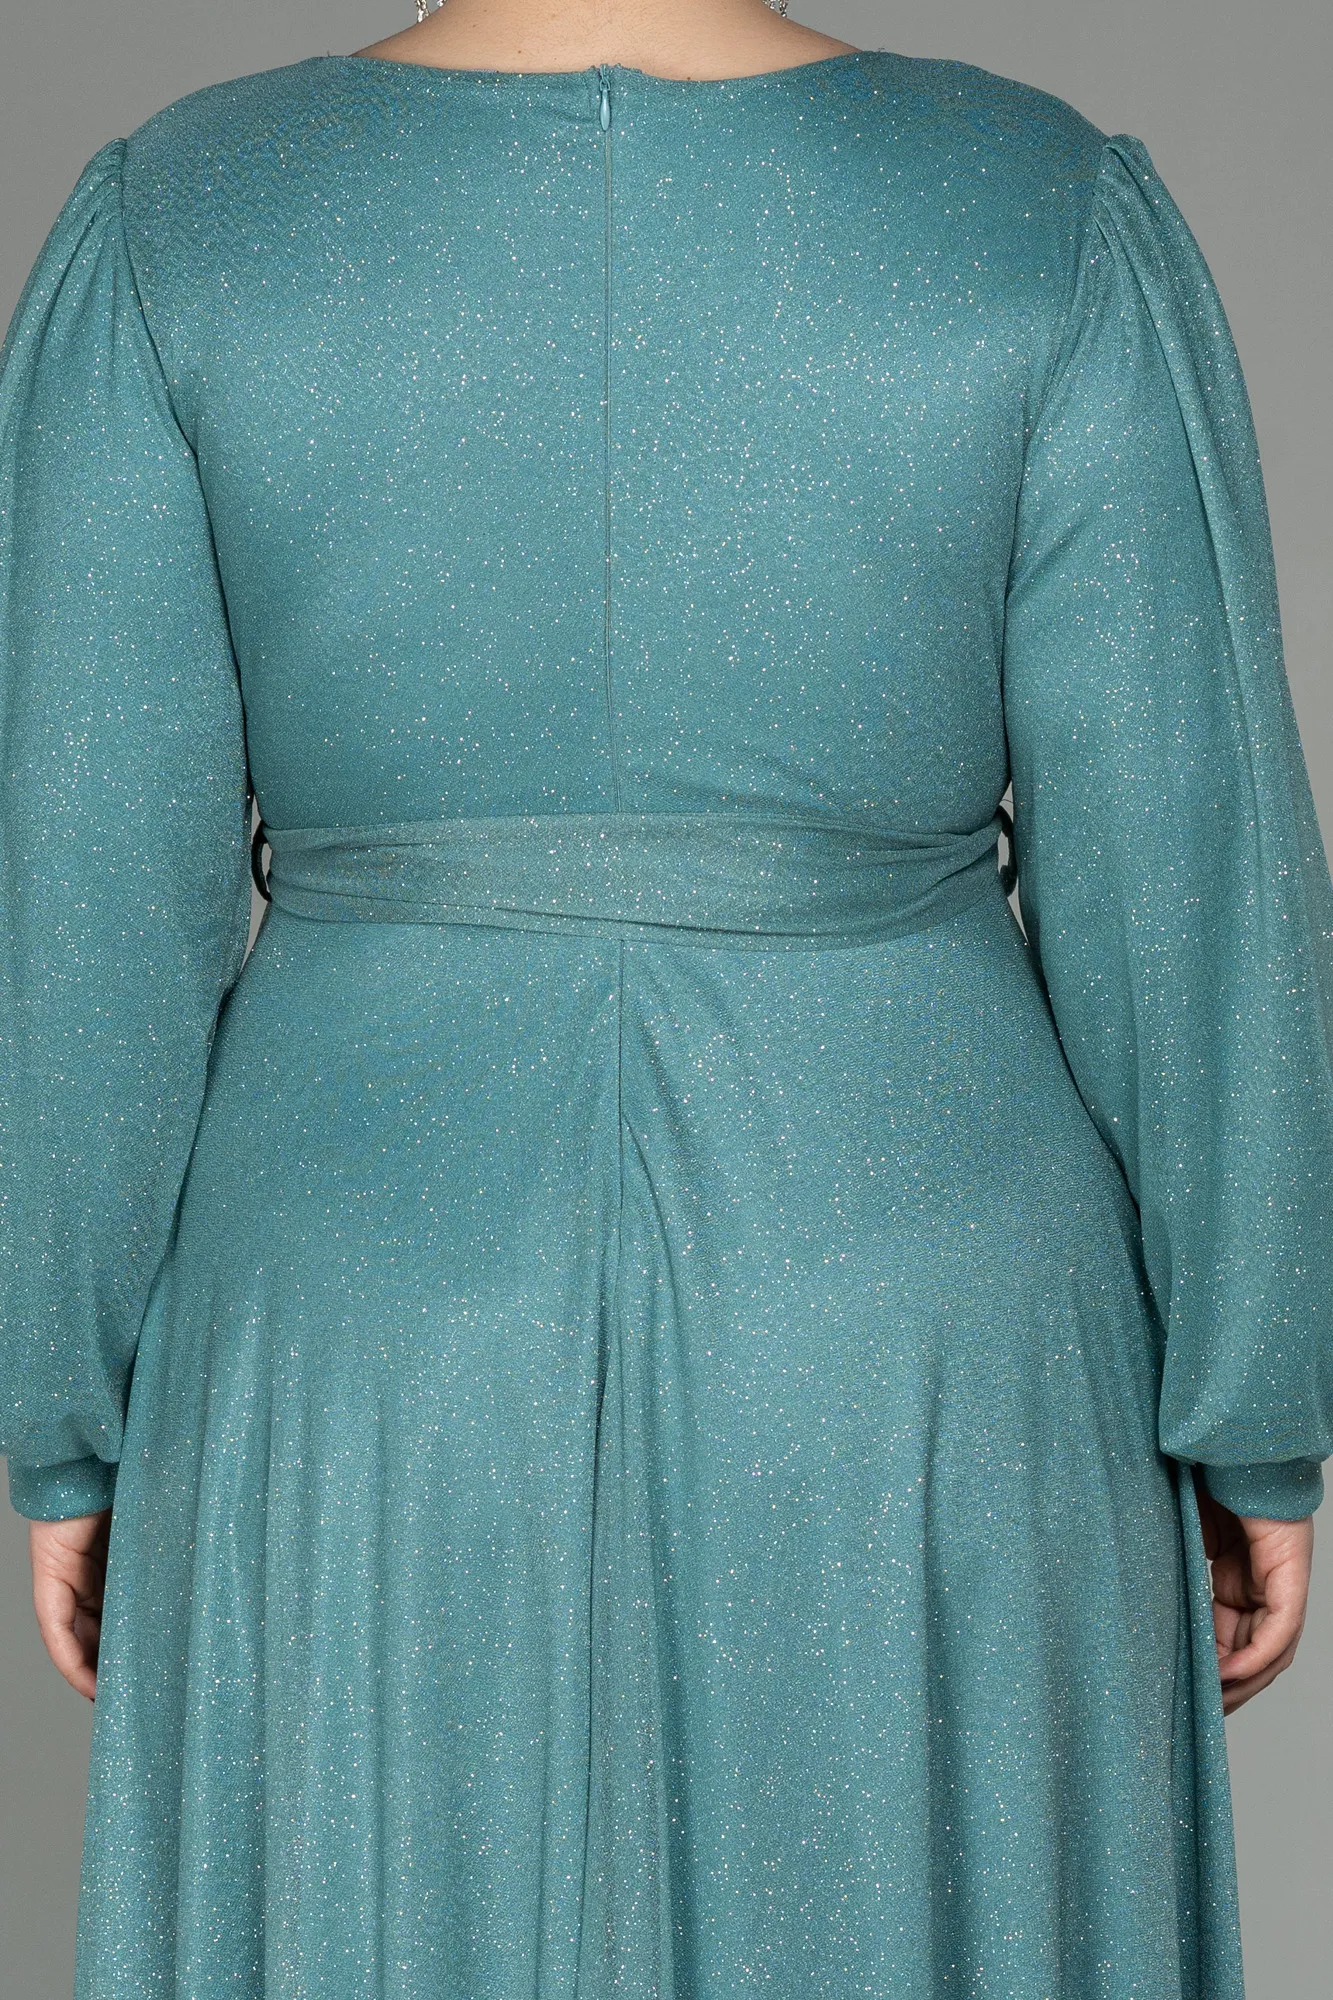 Turquoise-Long Plus Size Evening Dress ABU2962